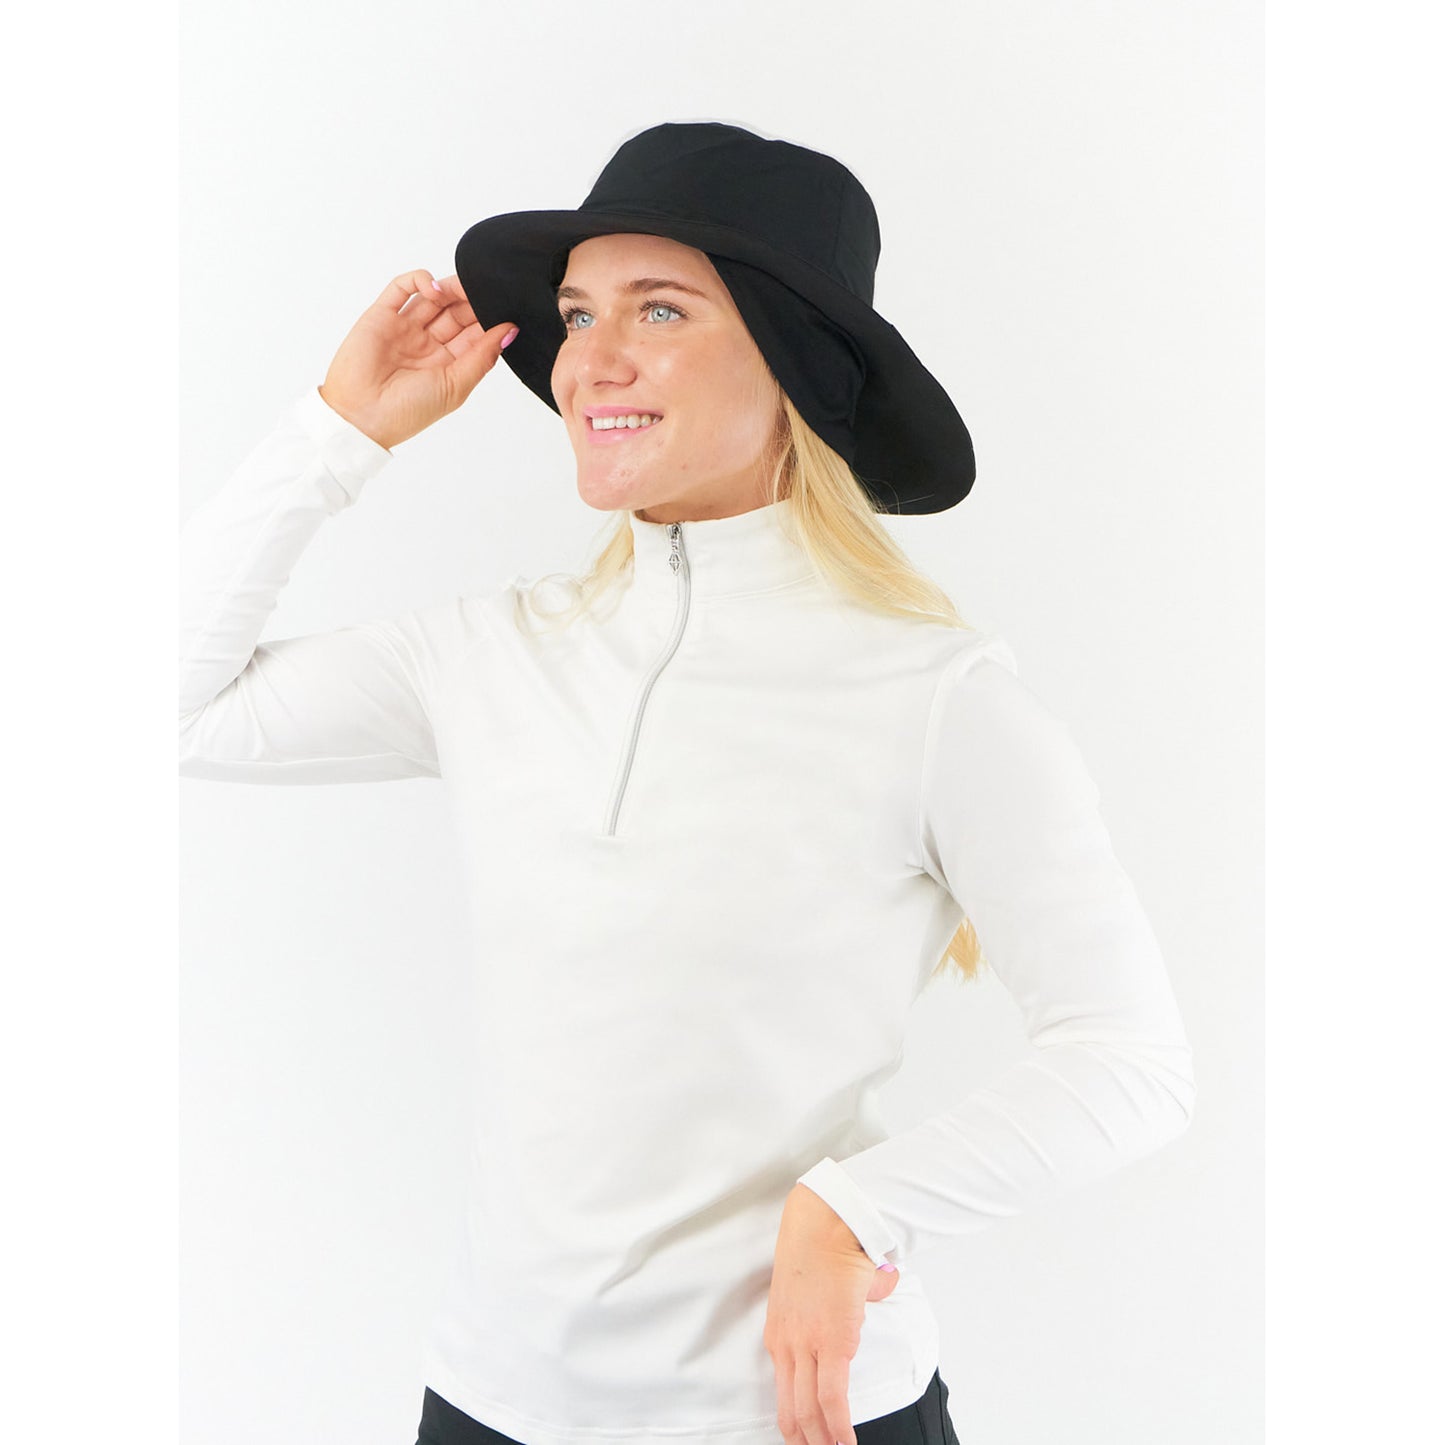 Surprizeshop Ladies Fleece Lined Waterproof Golf Hat with Extended Brim in Black